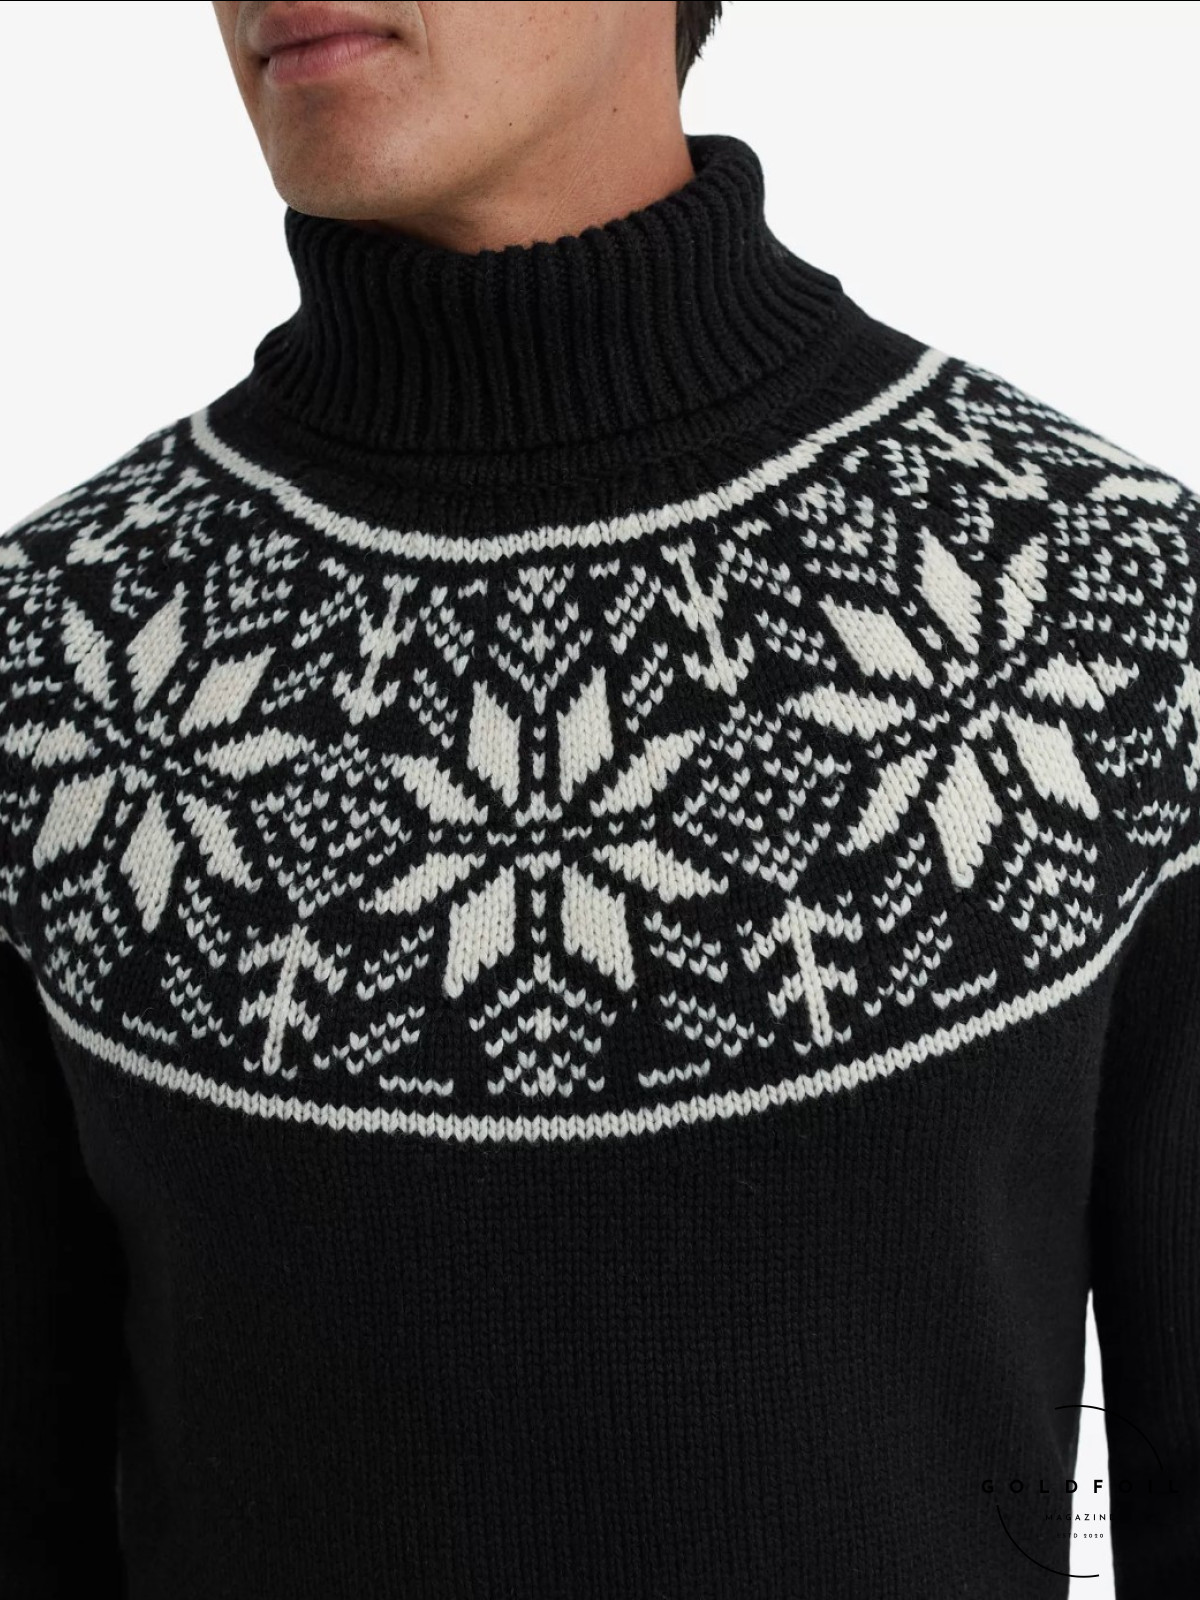 Men's knit Festive Christmas seasonal jumper from Reis is the perfect wool-blend jumper